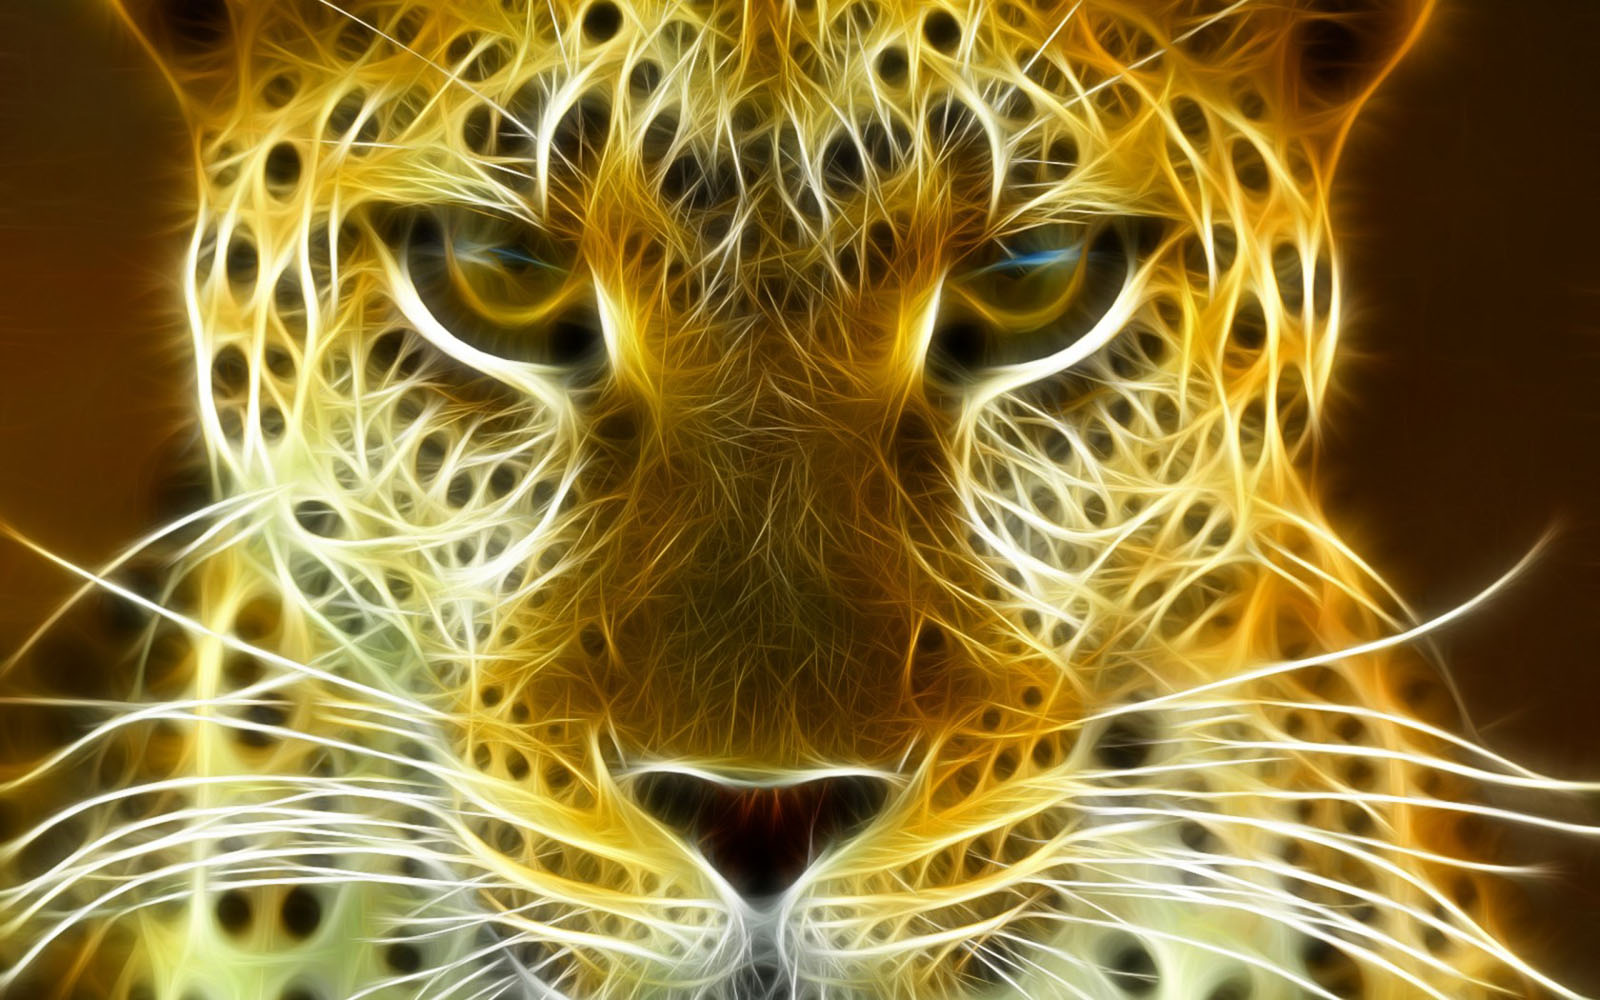 immagini in movimento 3d,felidae,barba,natura,giaguaro,arte frattale